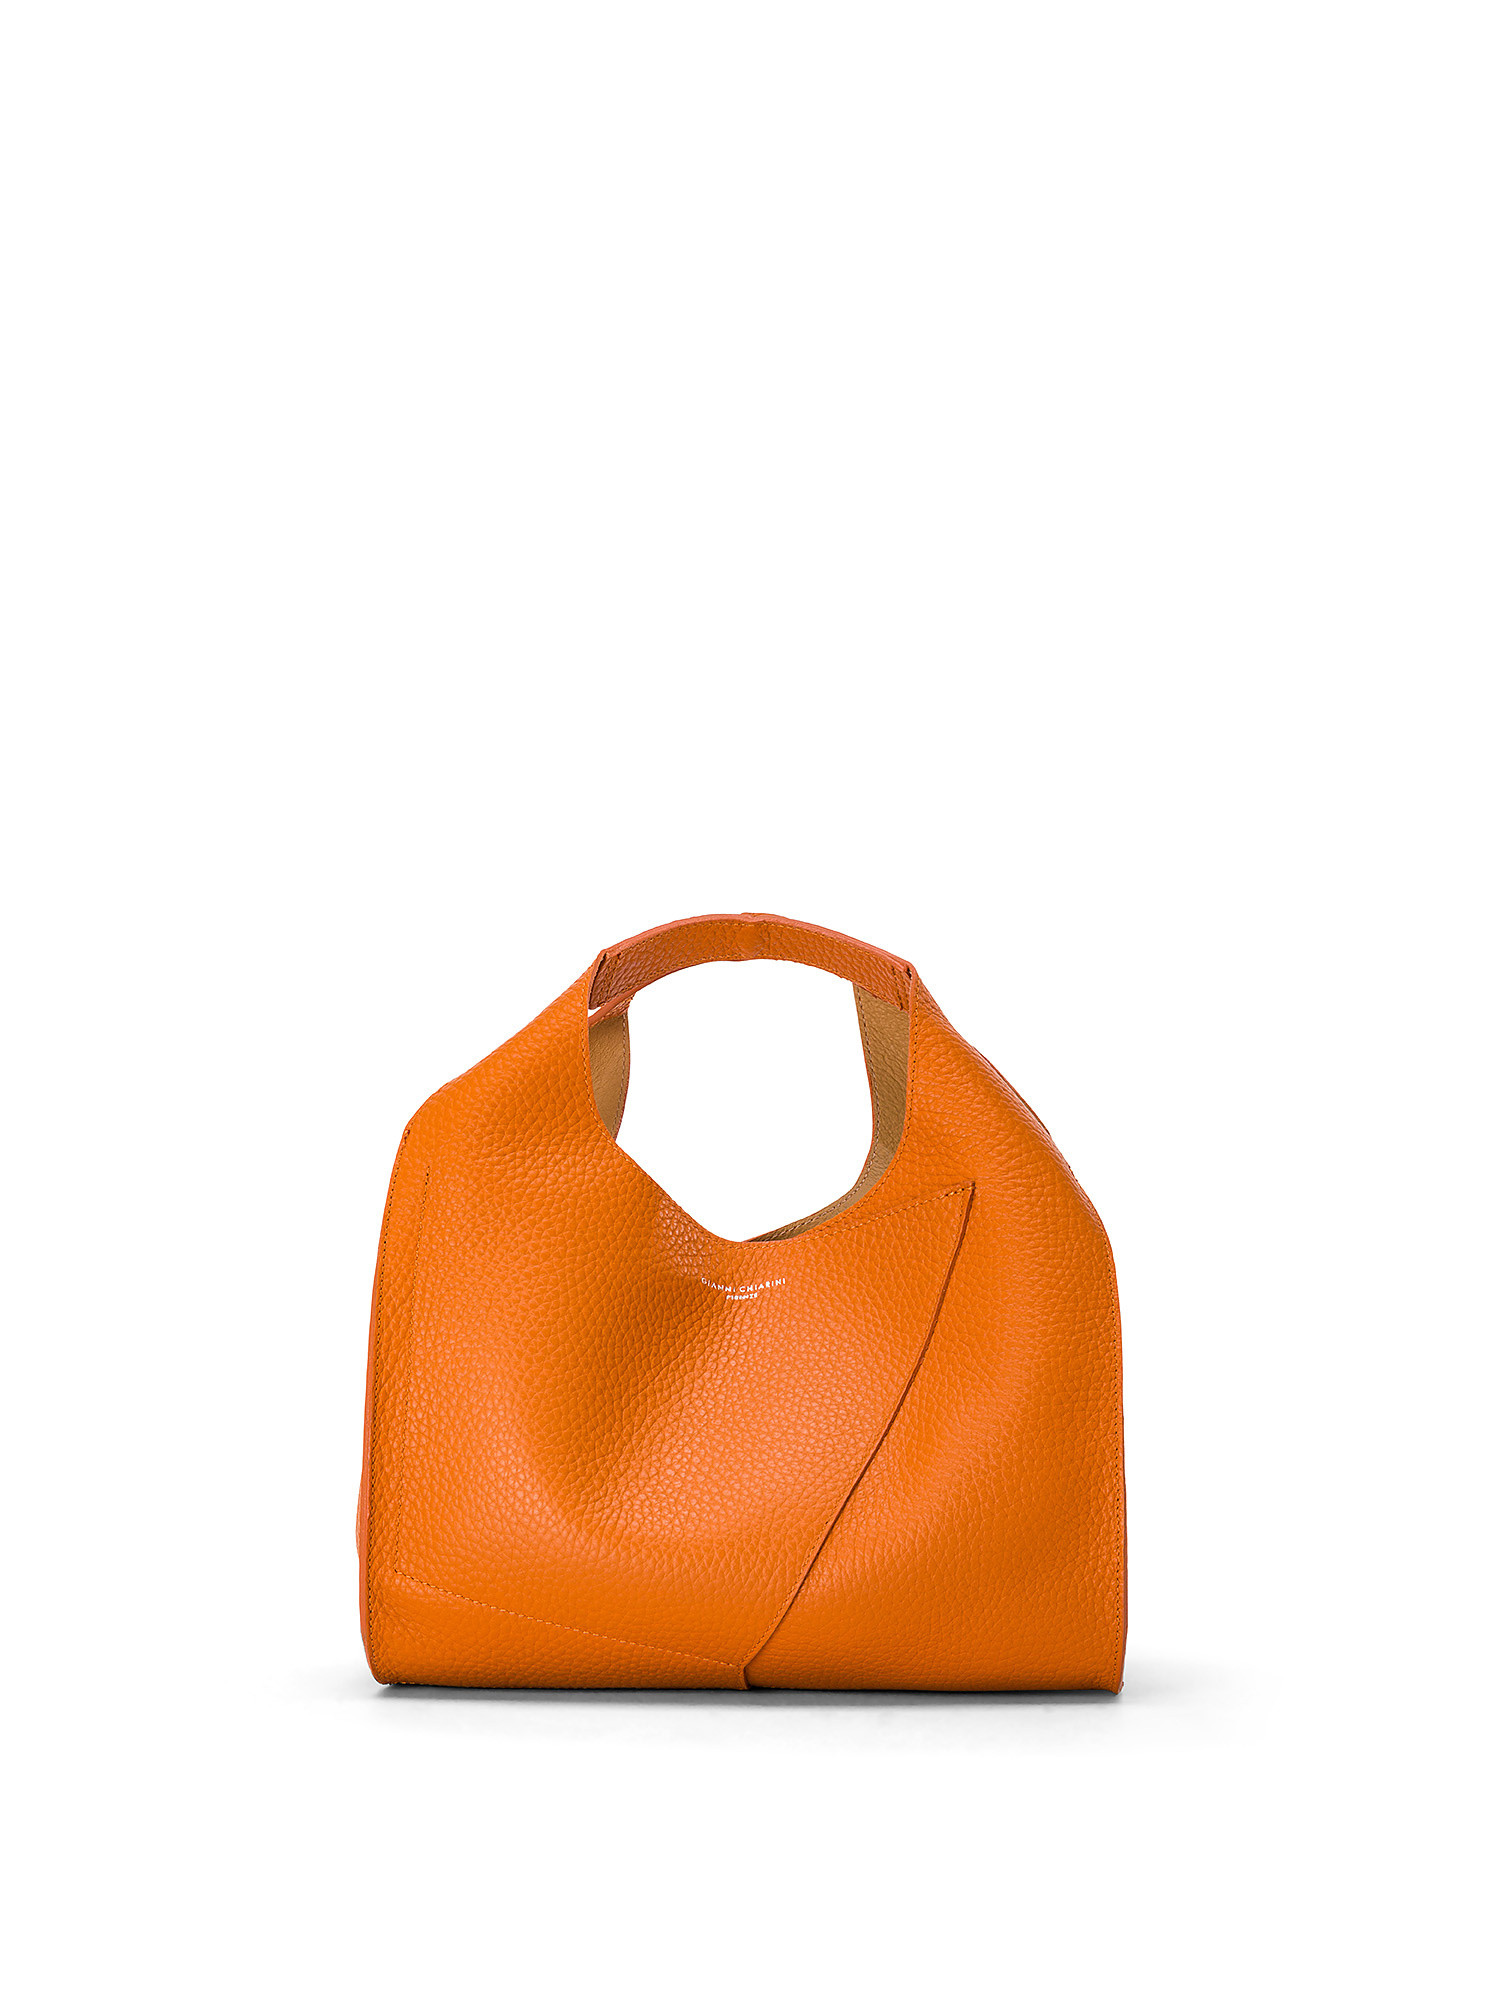 Gianni Chiarini - Euphoria bag in leather, Brown, large image number 0